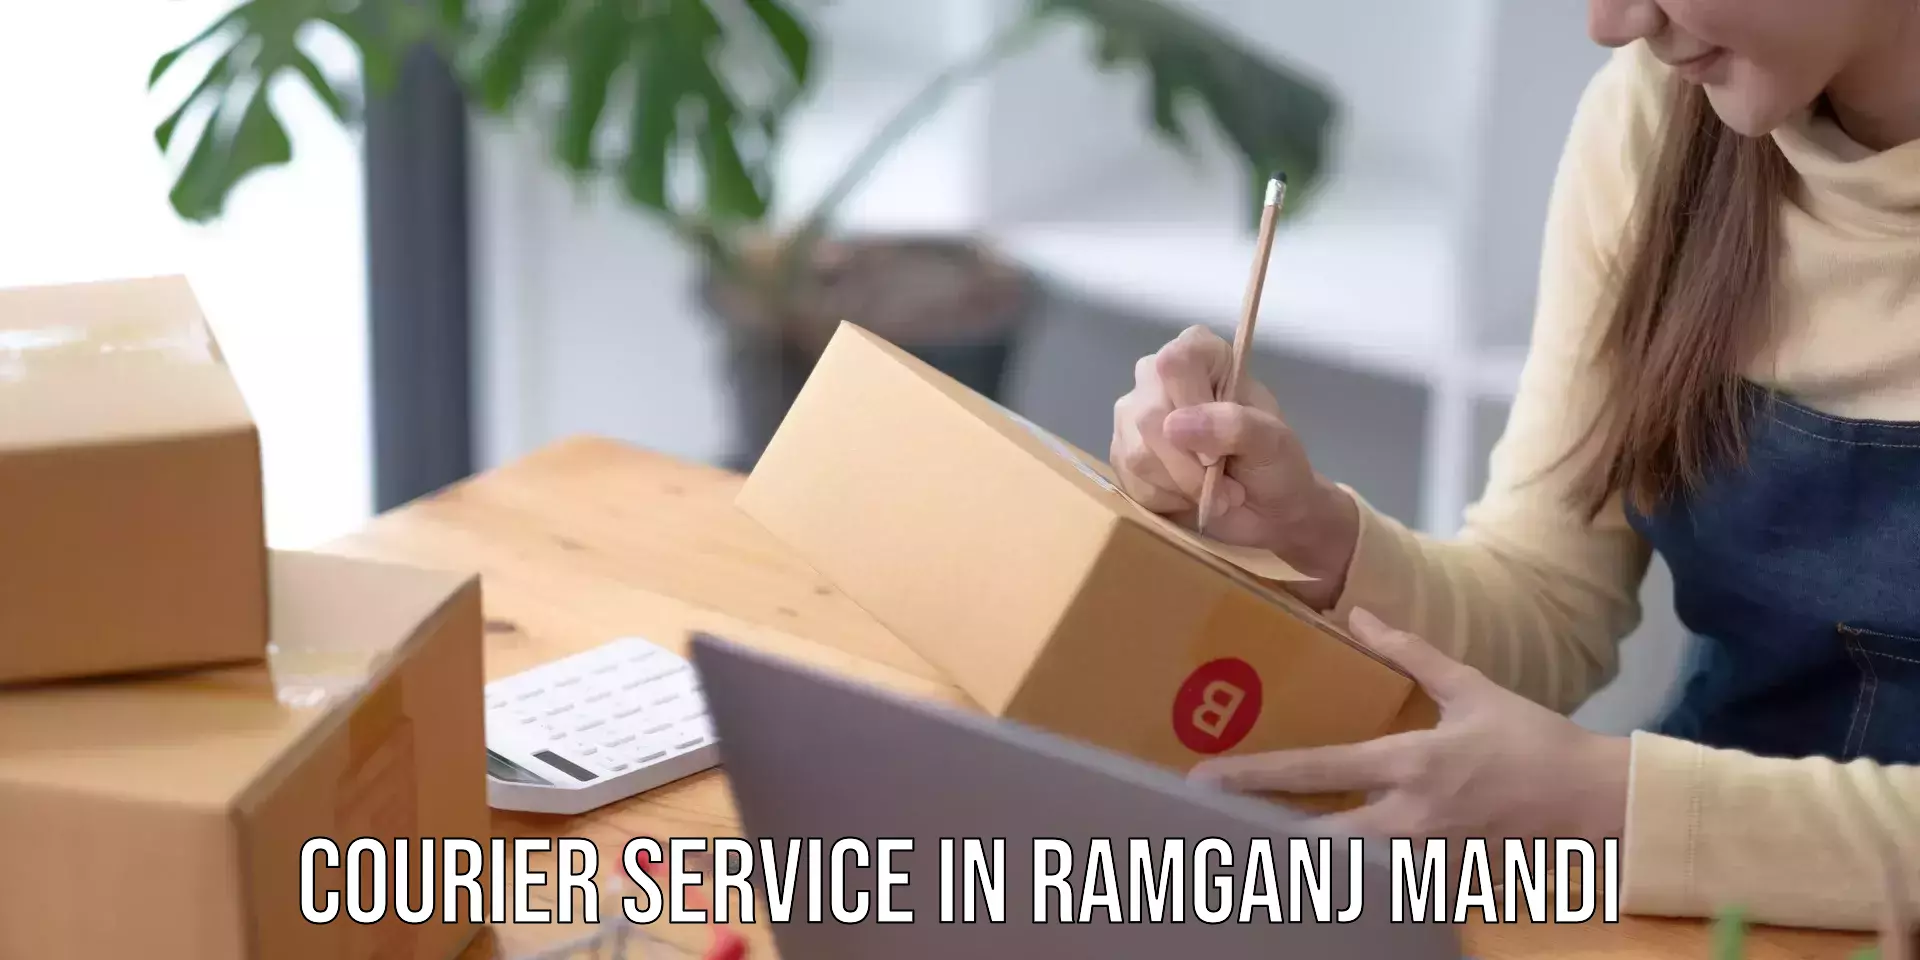 Cargo delivery service in Ramganj Mandi